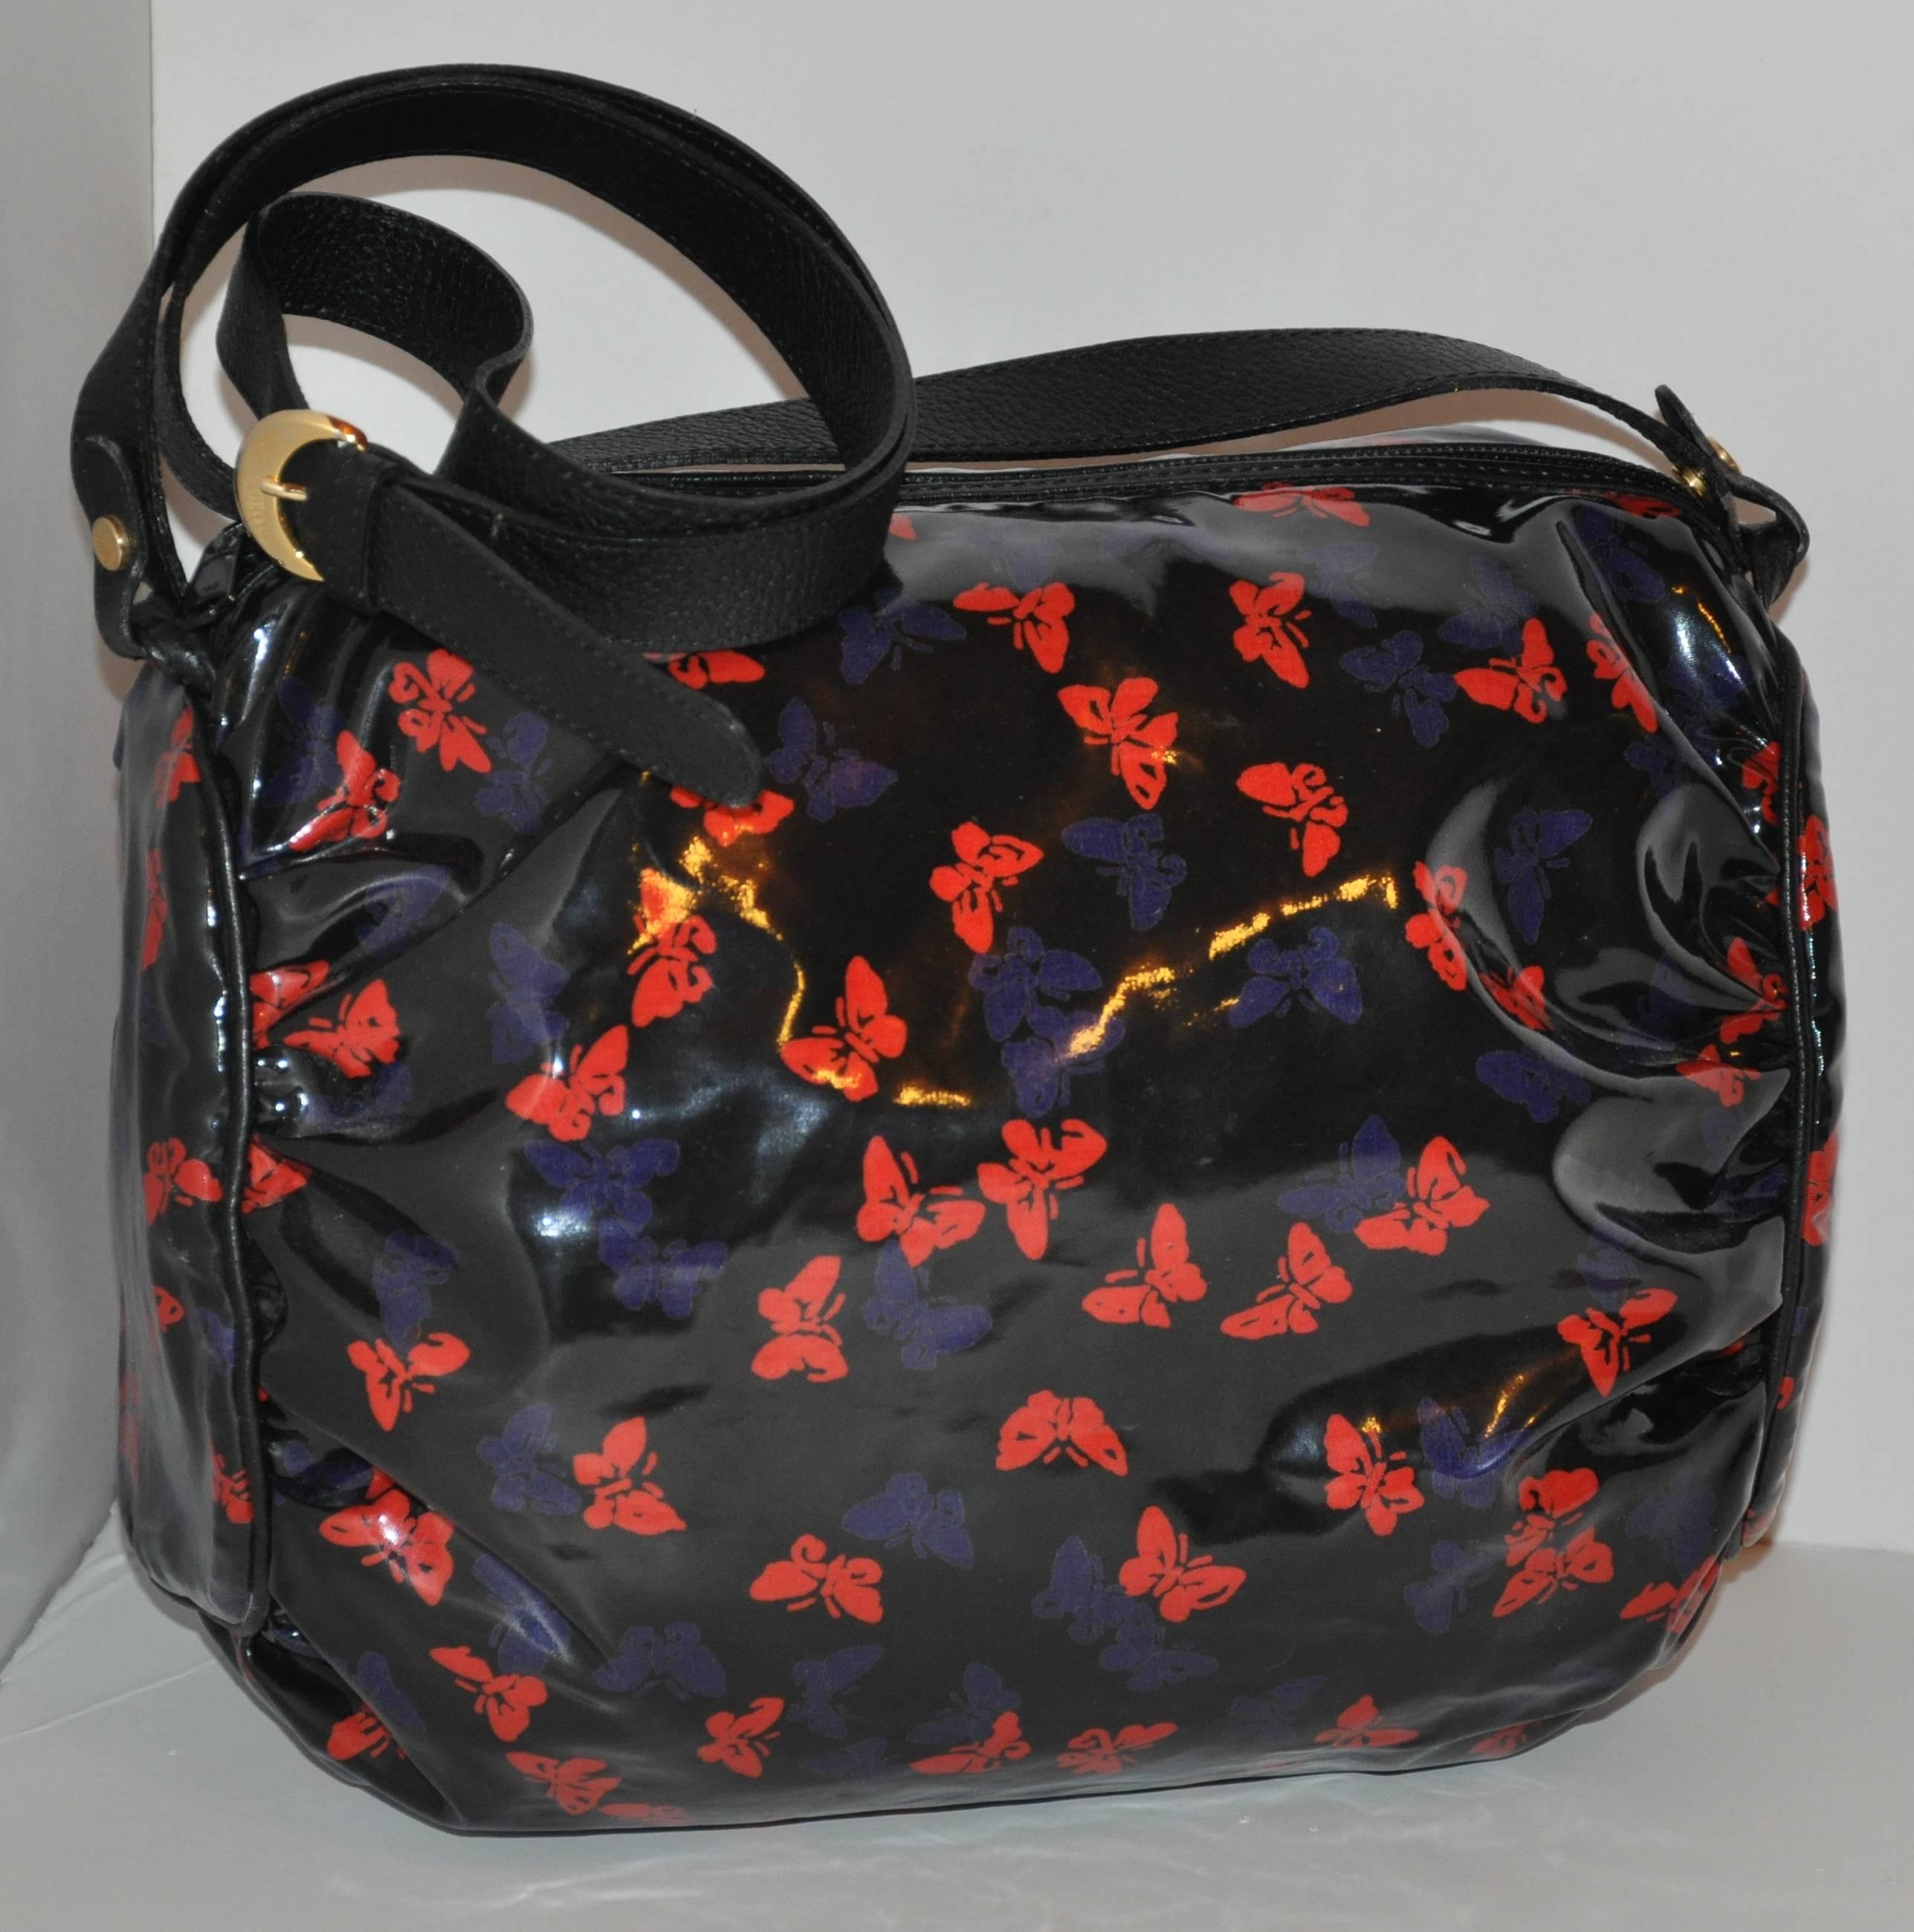         Bottega Veneta wonderful vinyl-coated canvas shoulder bag features multi-colors of 